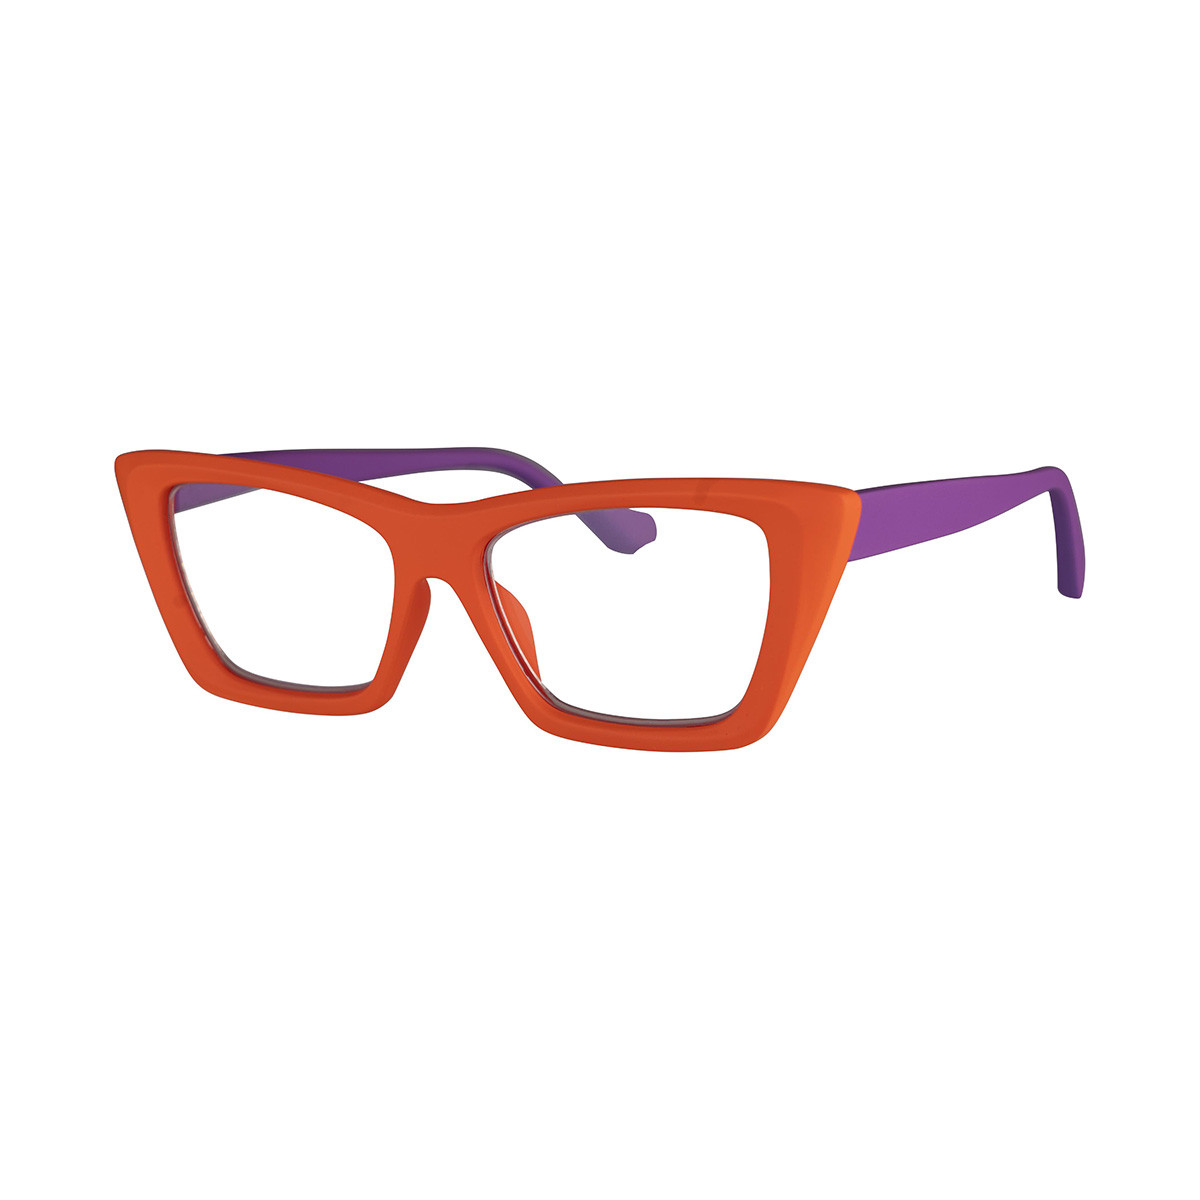 Imagen de Iaview gafa de presbicia TOPY naranja-purpura +2,00